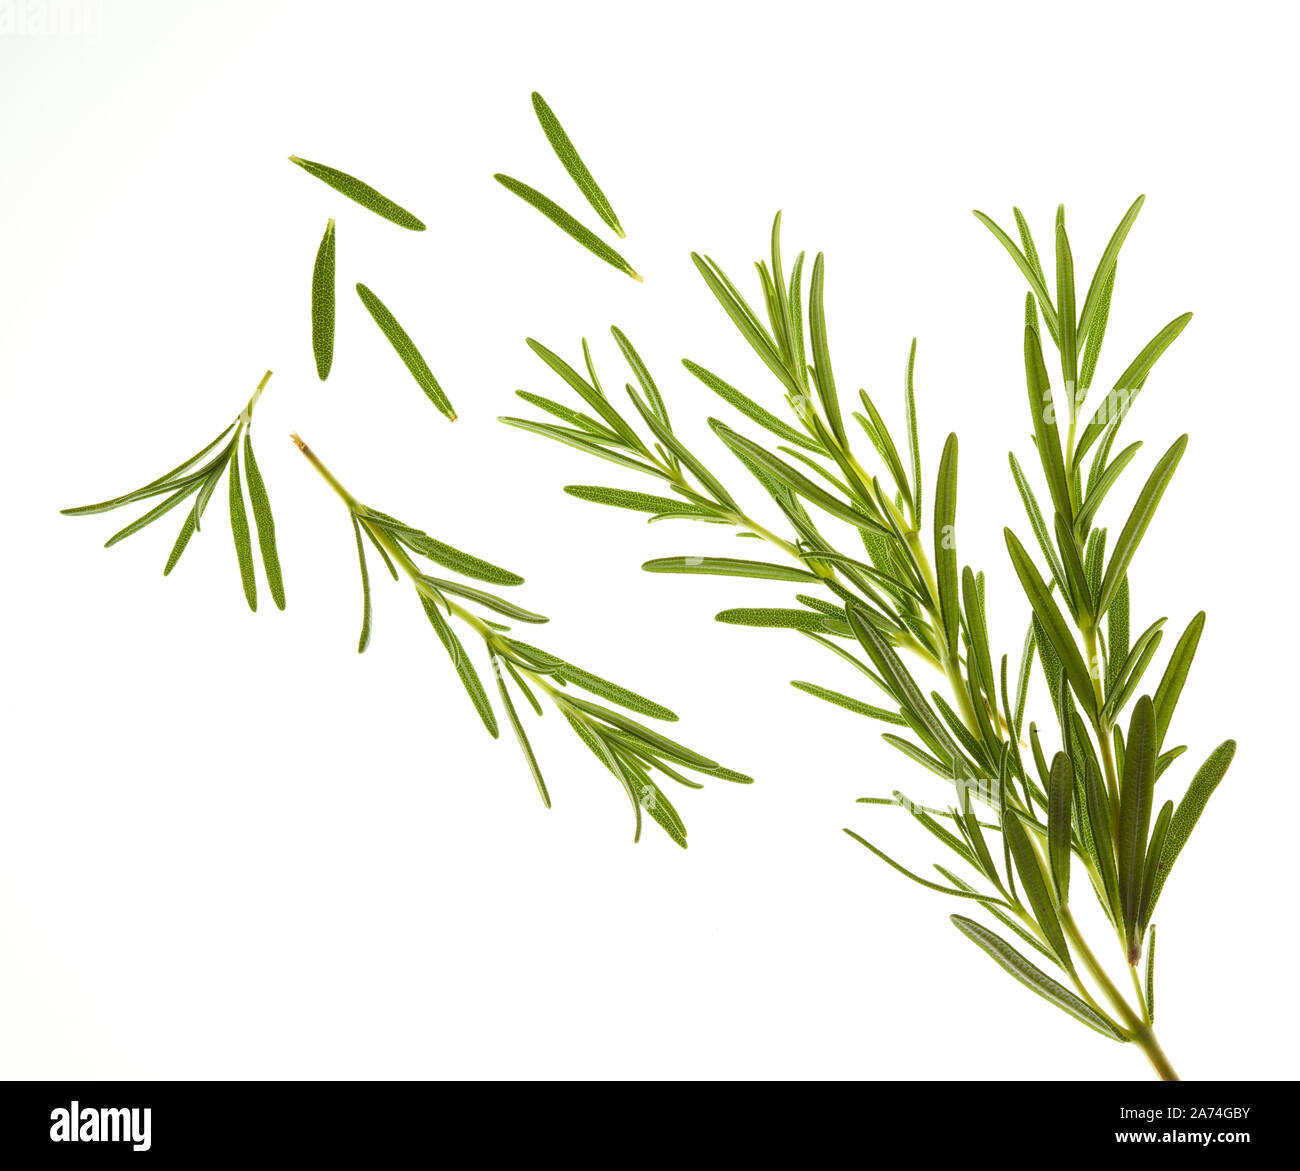 Herbes, Rosemary sur métro blanche Banque D'Images